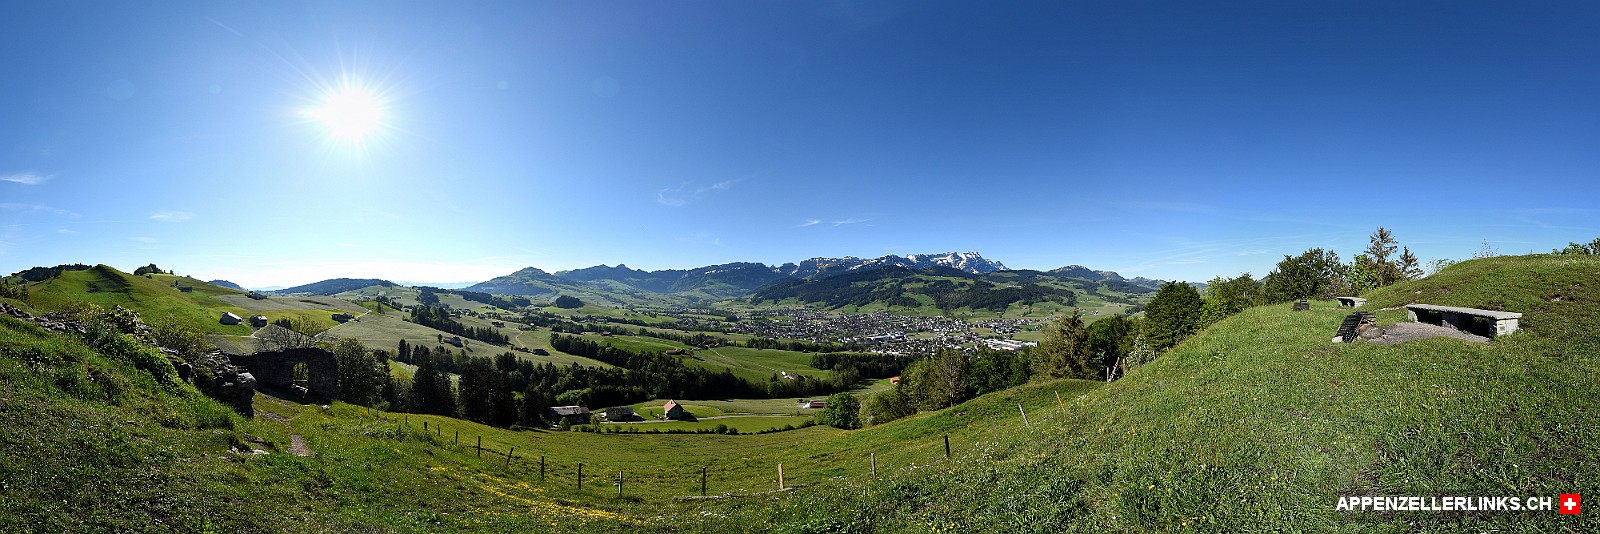 Panorama Appenzell (Feuerstellen Clanx) Pano­rama Appen­zell (Feu­er­stellen Clanx)